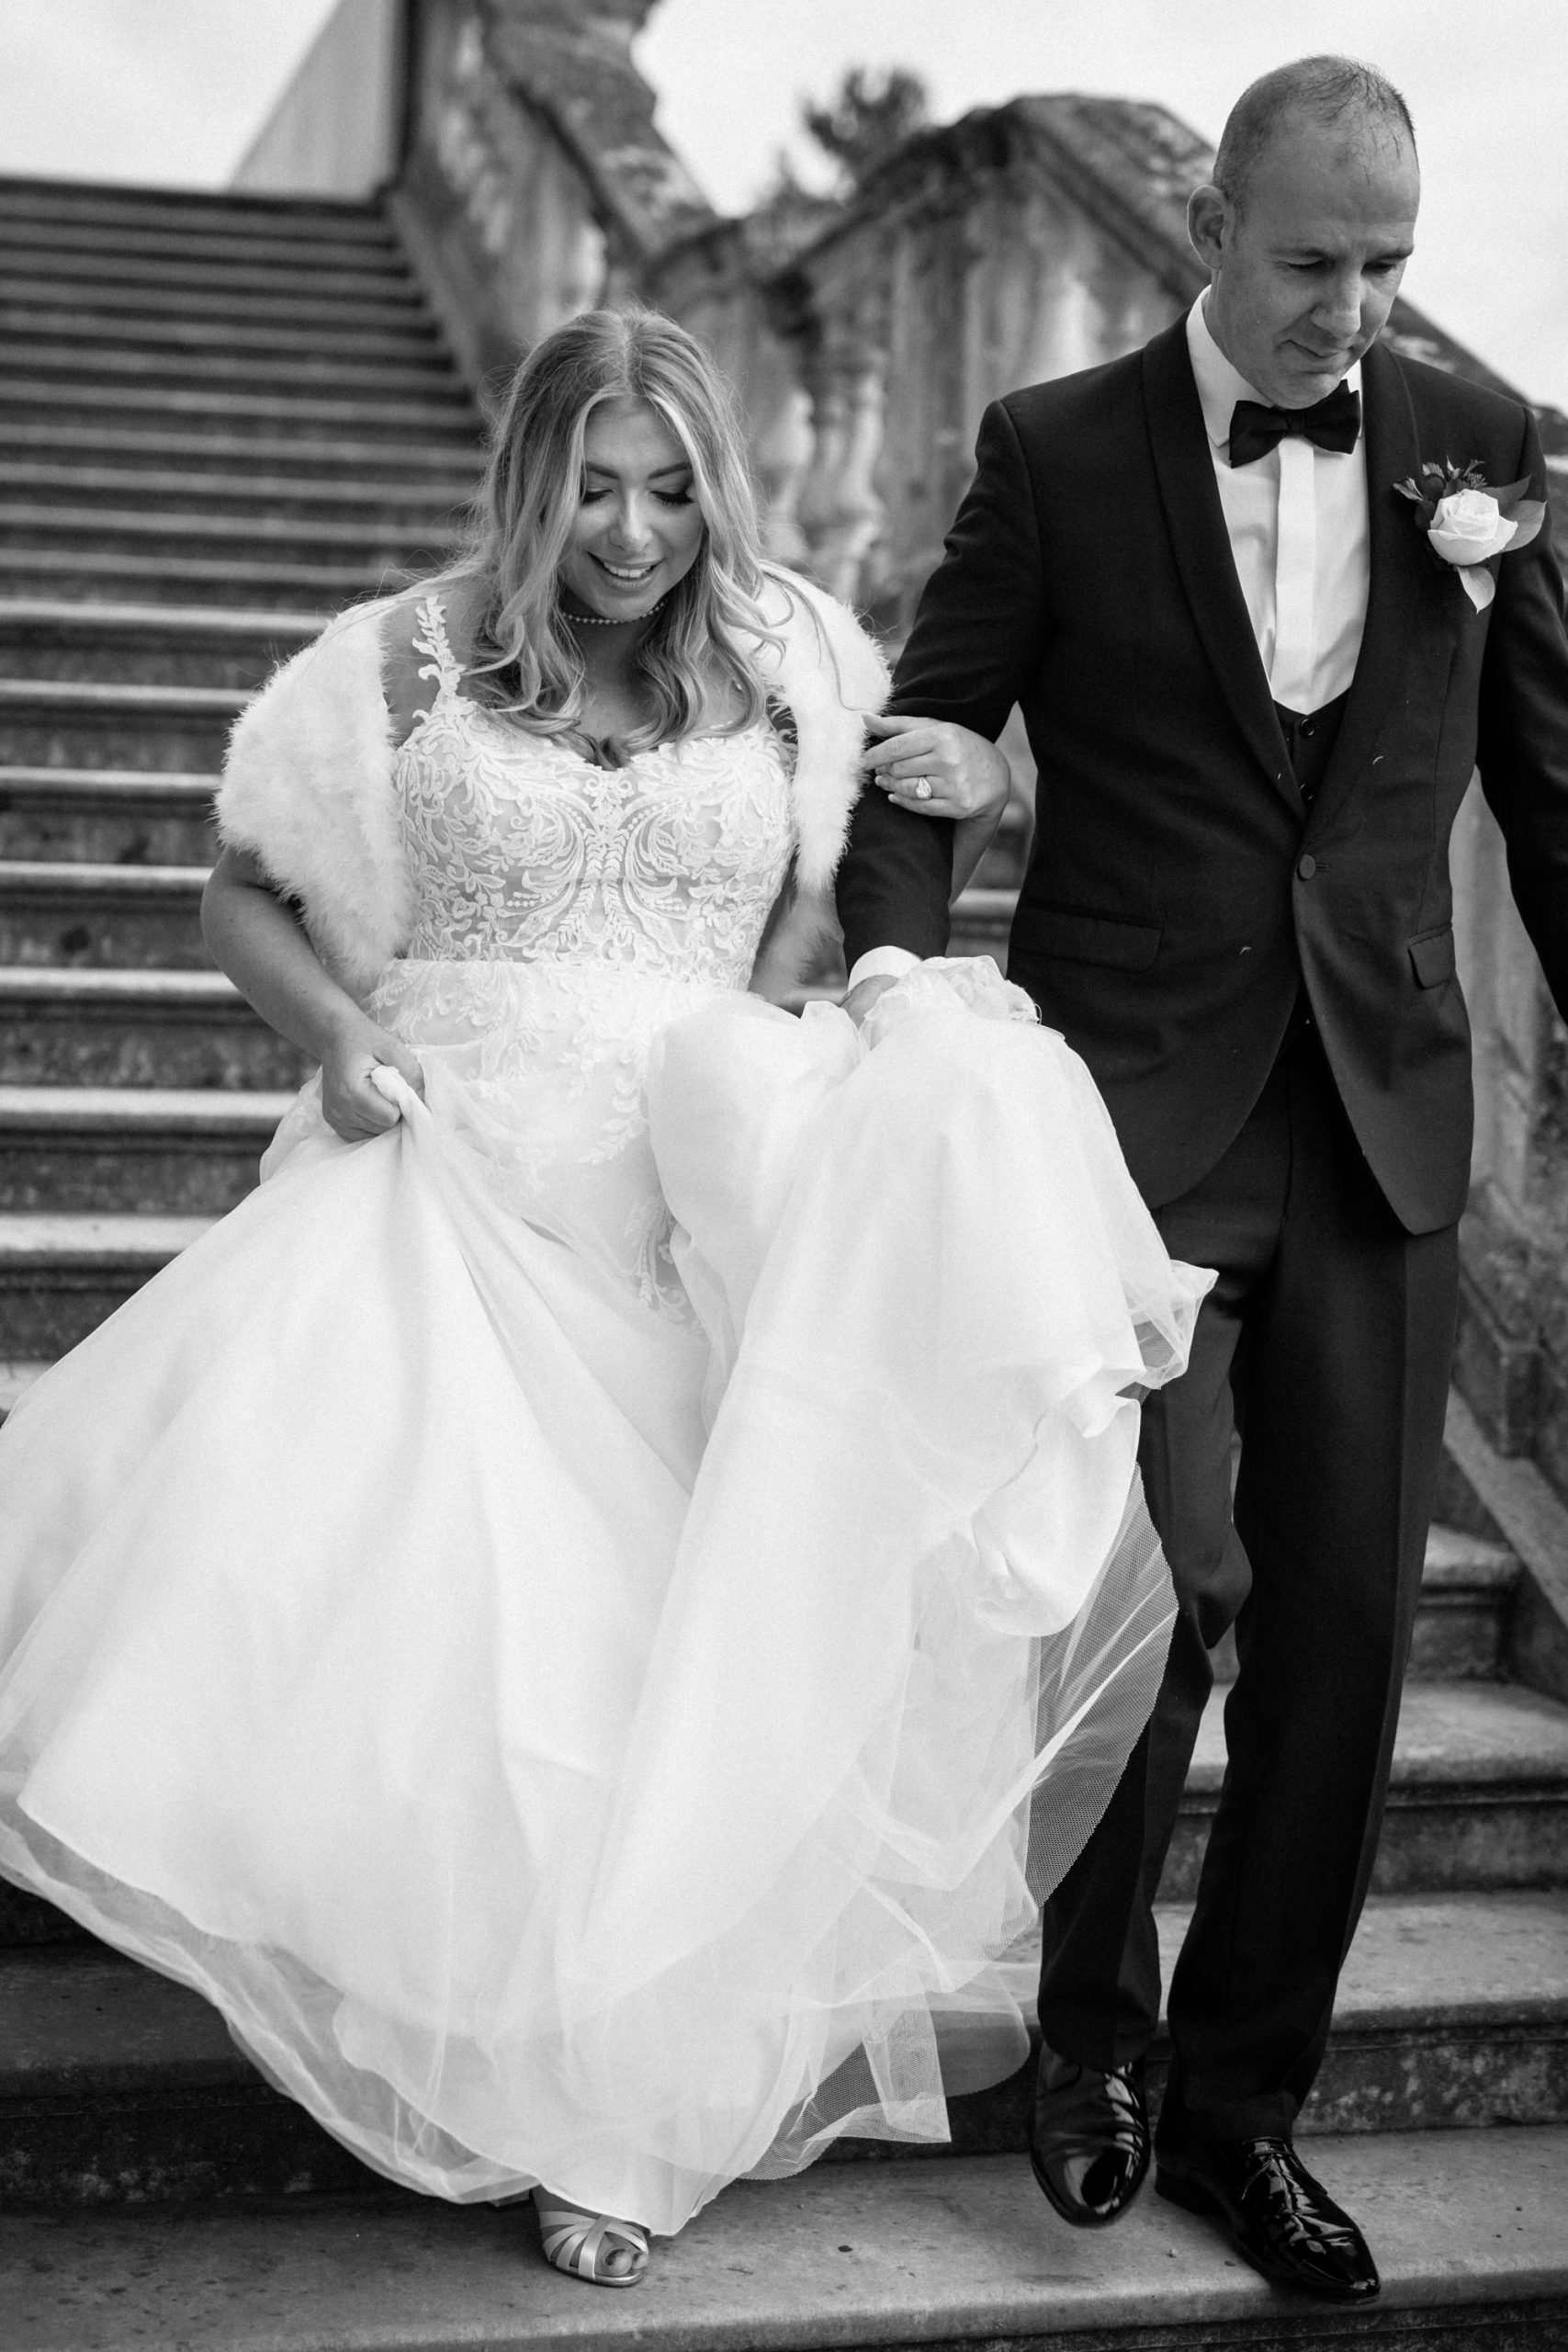 black and white image. Bride and groom walking down steps smiling. Groom wears black tie. Bride wears white wedding dress and white fur shrug.